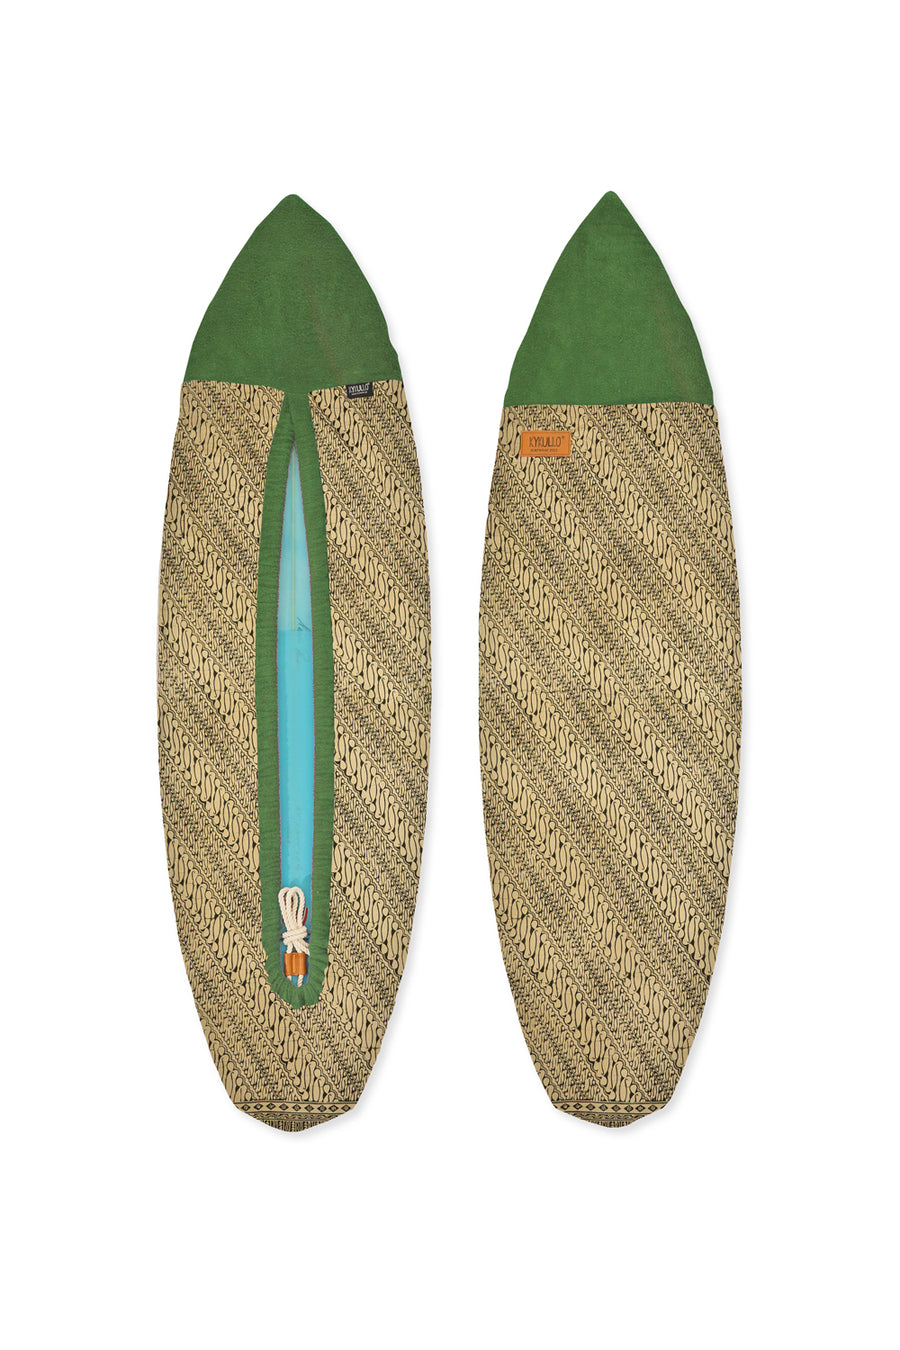 SURFWRAP 5'10 - OLIVE (RETAIL)